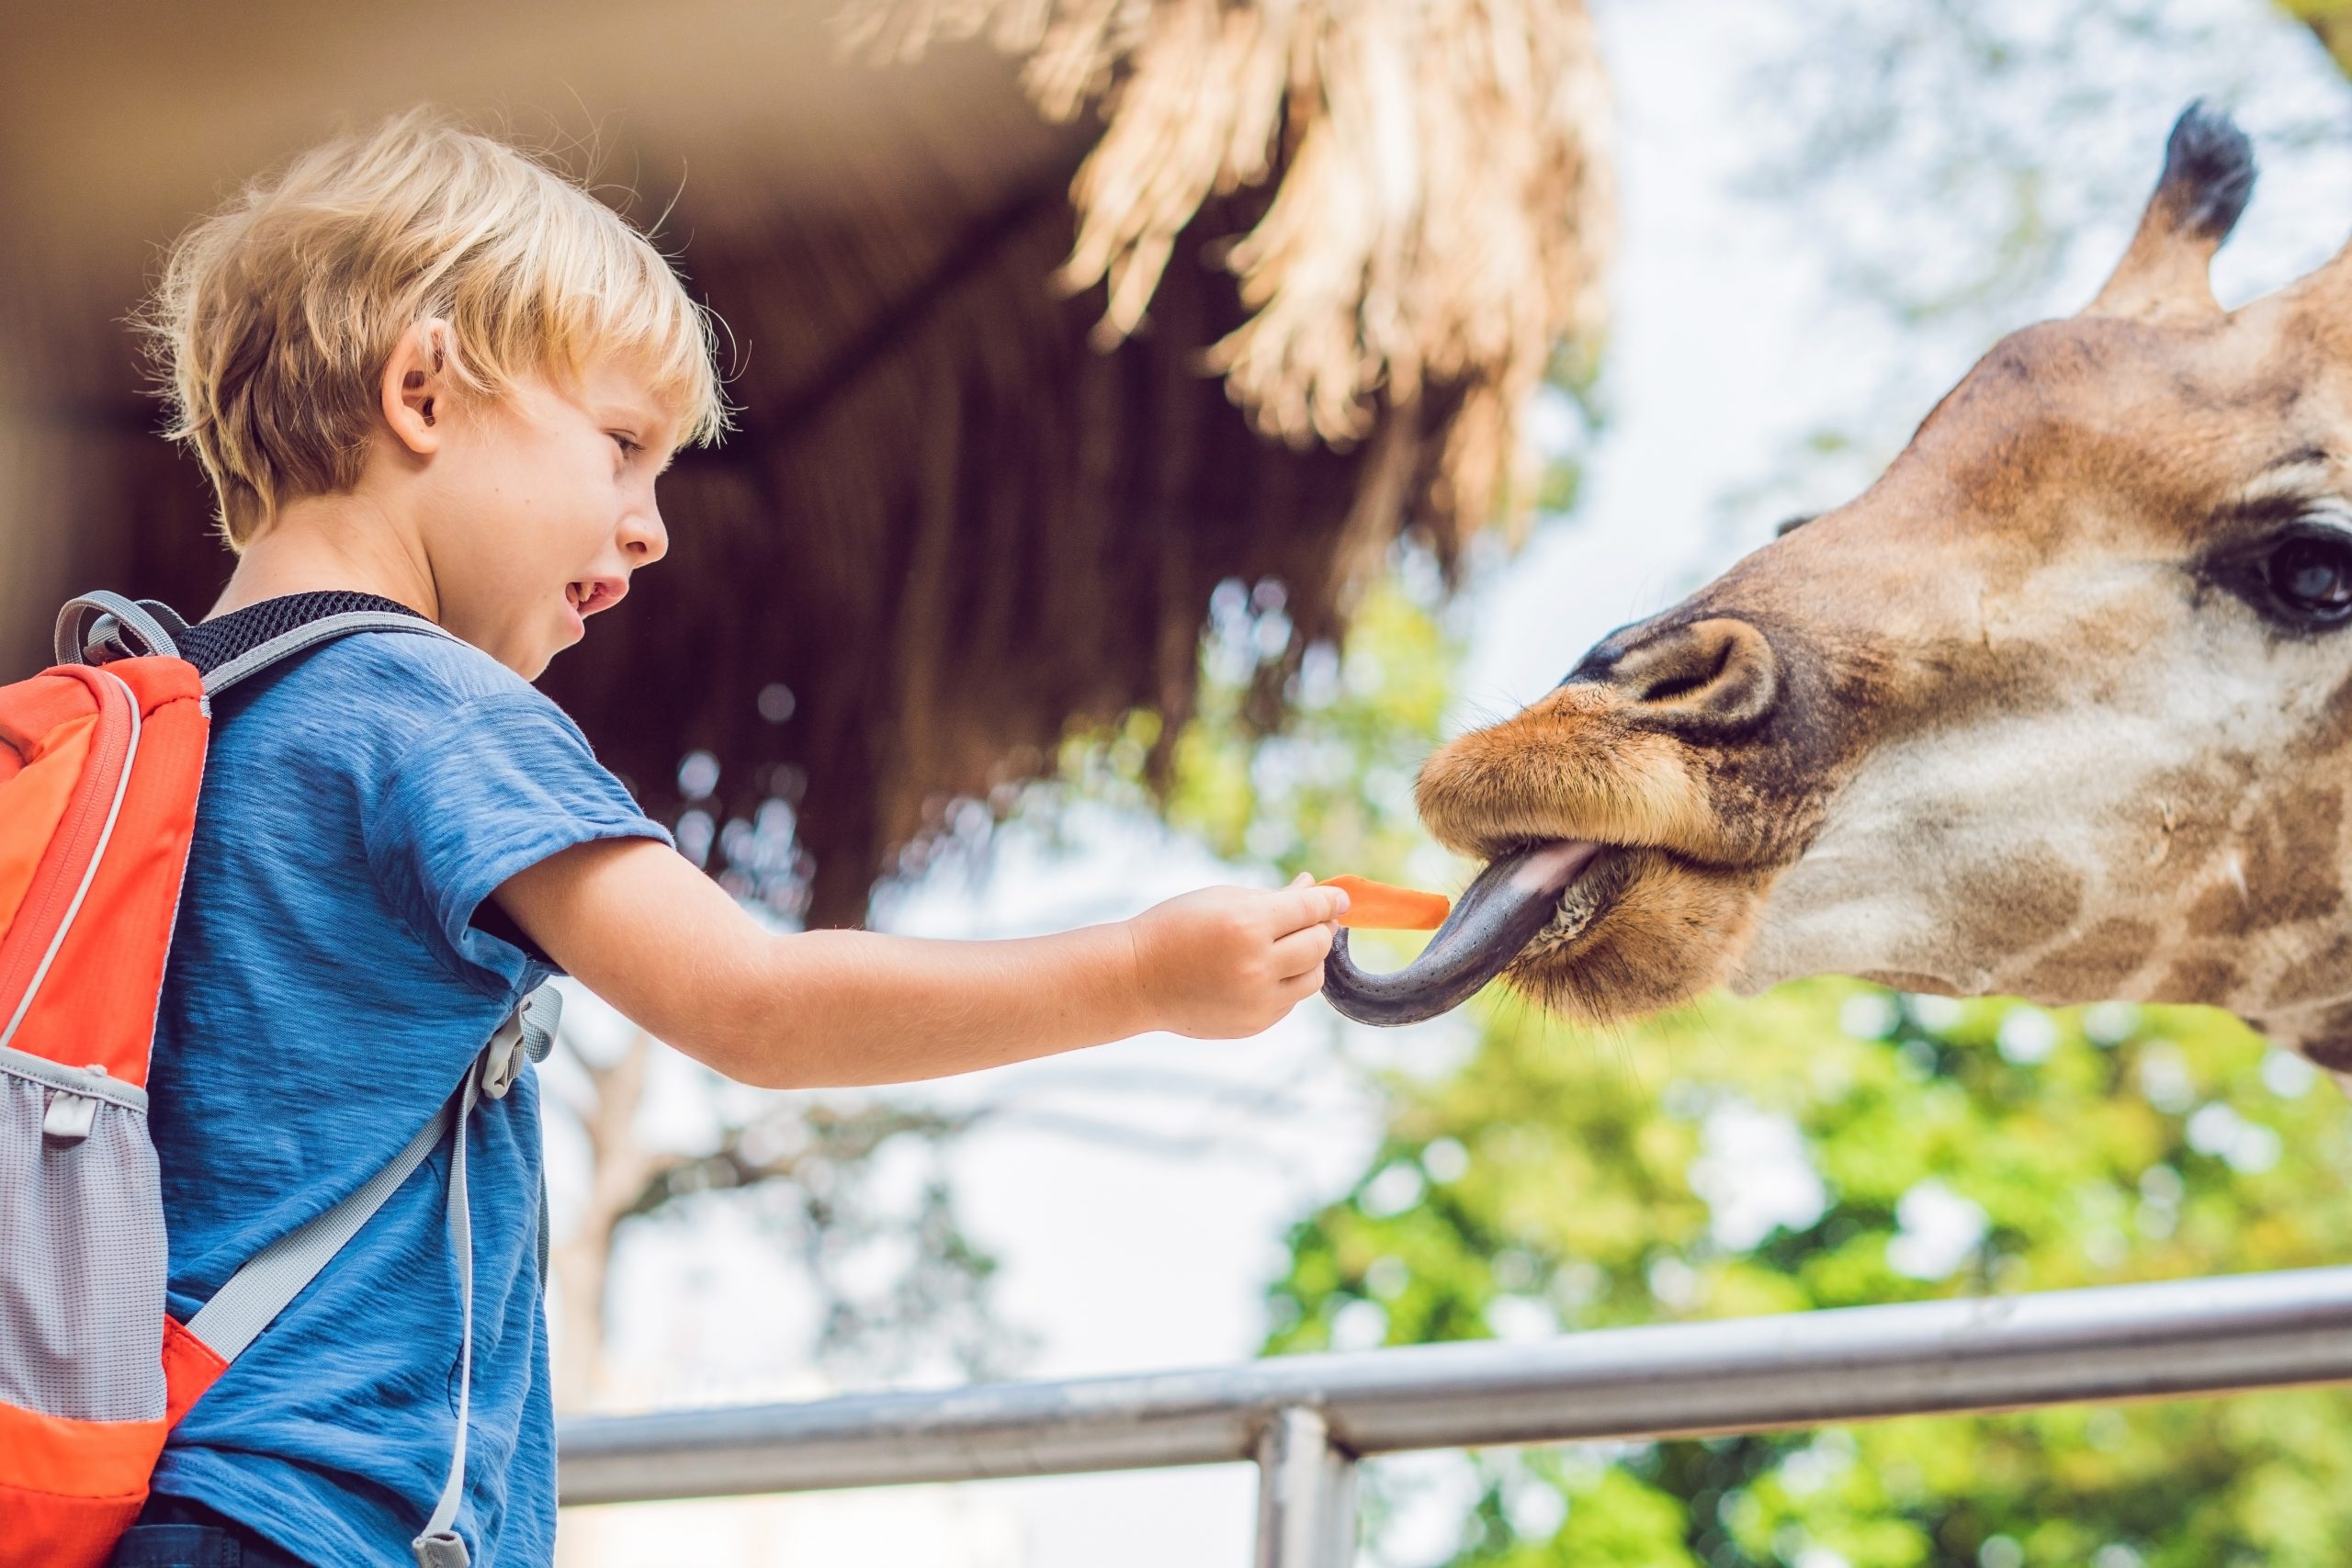 little kid boy watching and feeding giraffe in zoo. Happy kid having fun with animals safari park on warm summer day